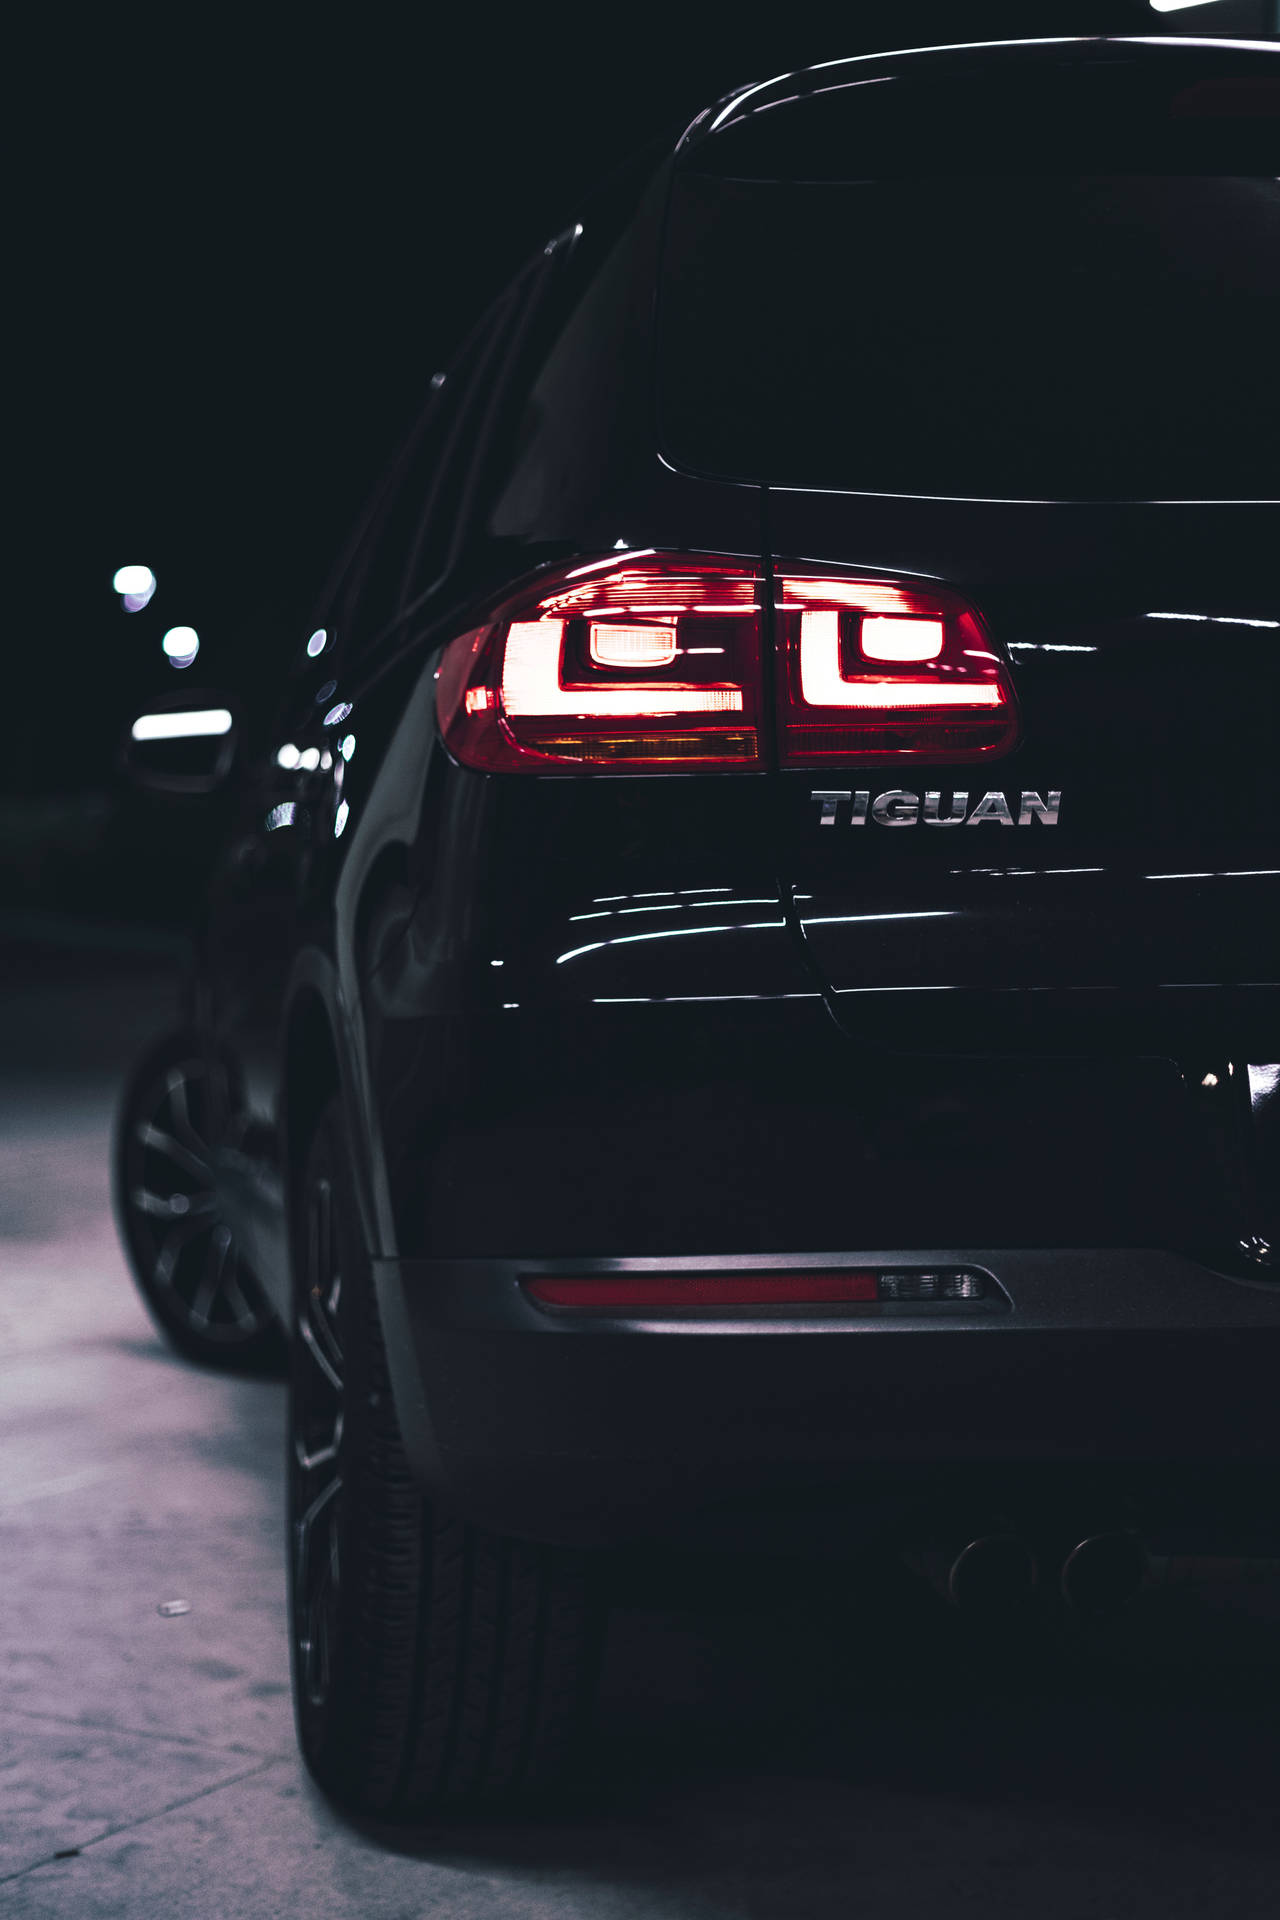 Volkswagen Tiguan, Volkswagen, Car, Black, Rear View, Lights, Backlight Background